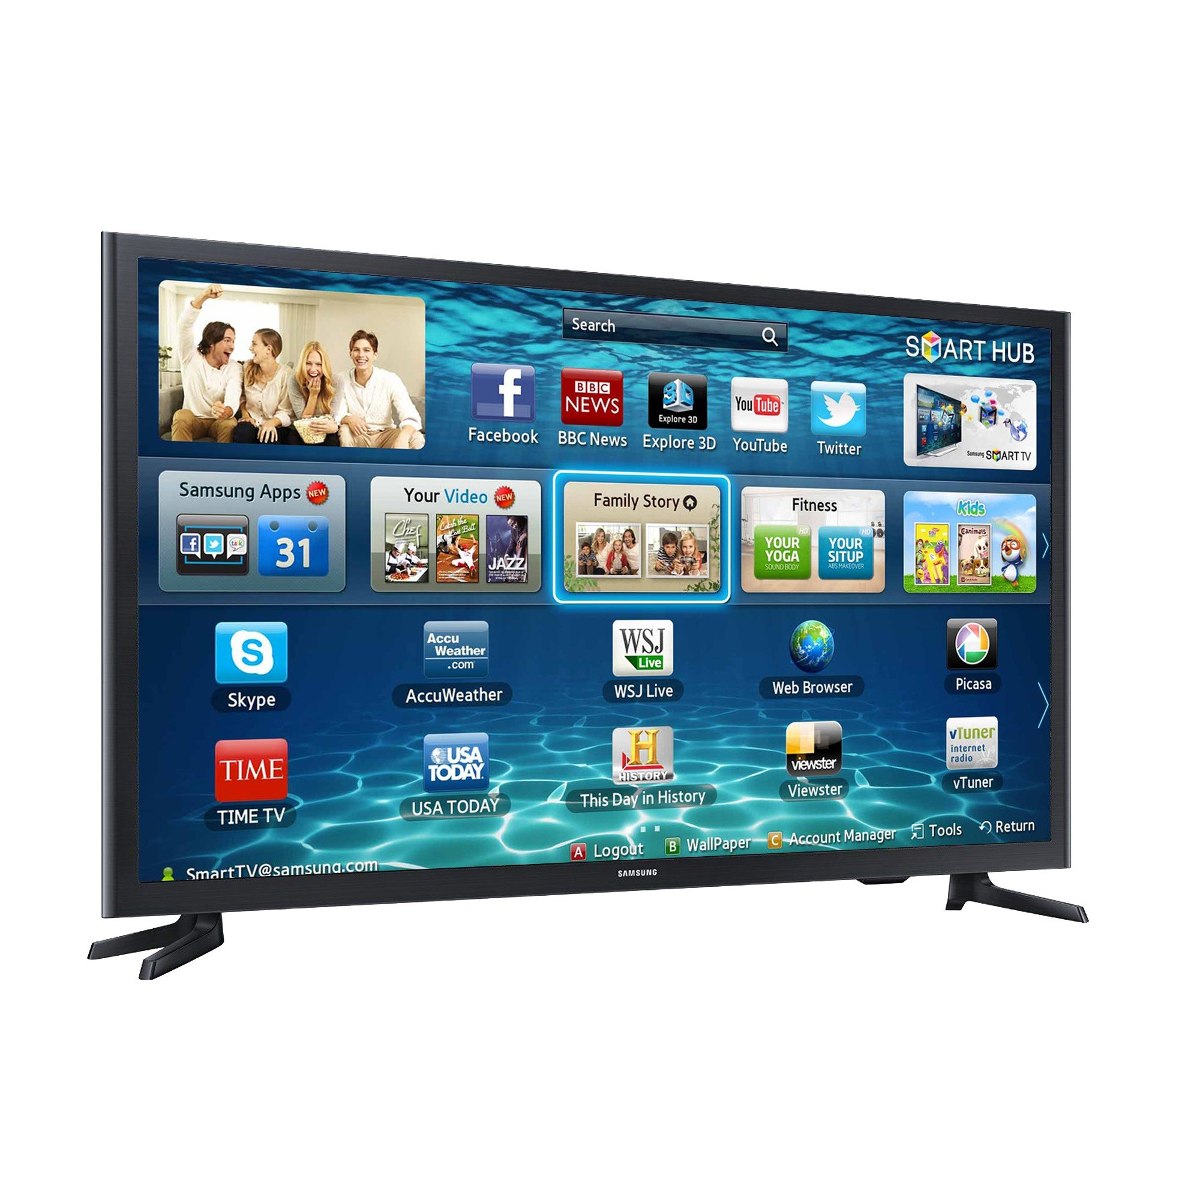 Samsung Smart TV 32. Смарт ТВ 32 дюйма рейтинг 2023. Список телевизоров самсунг